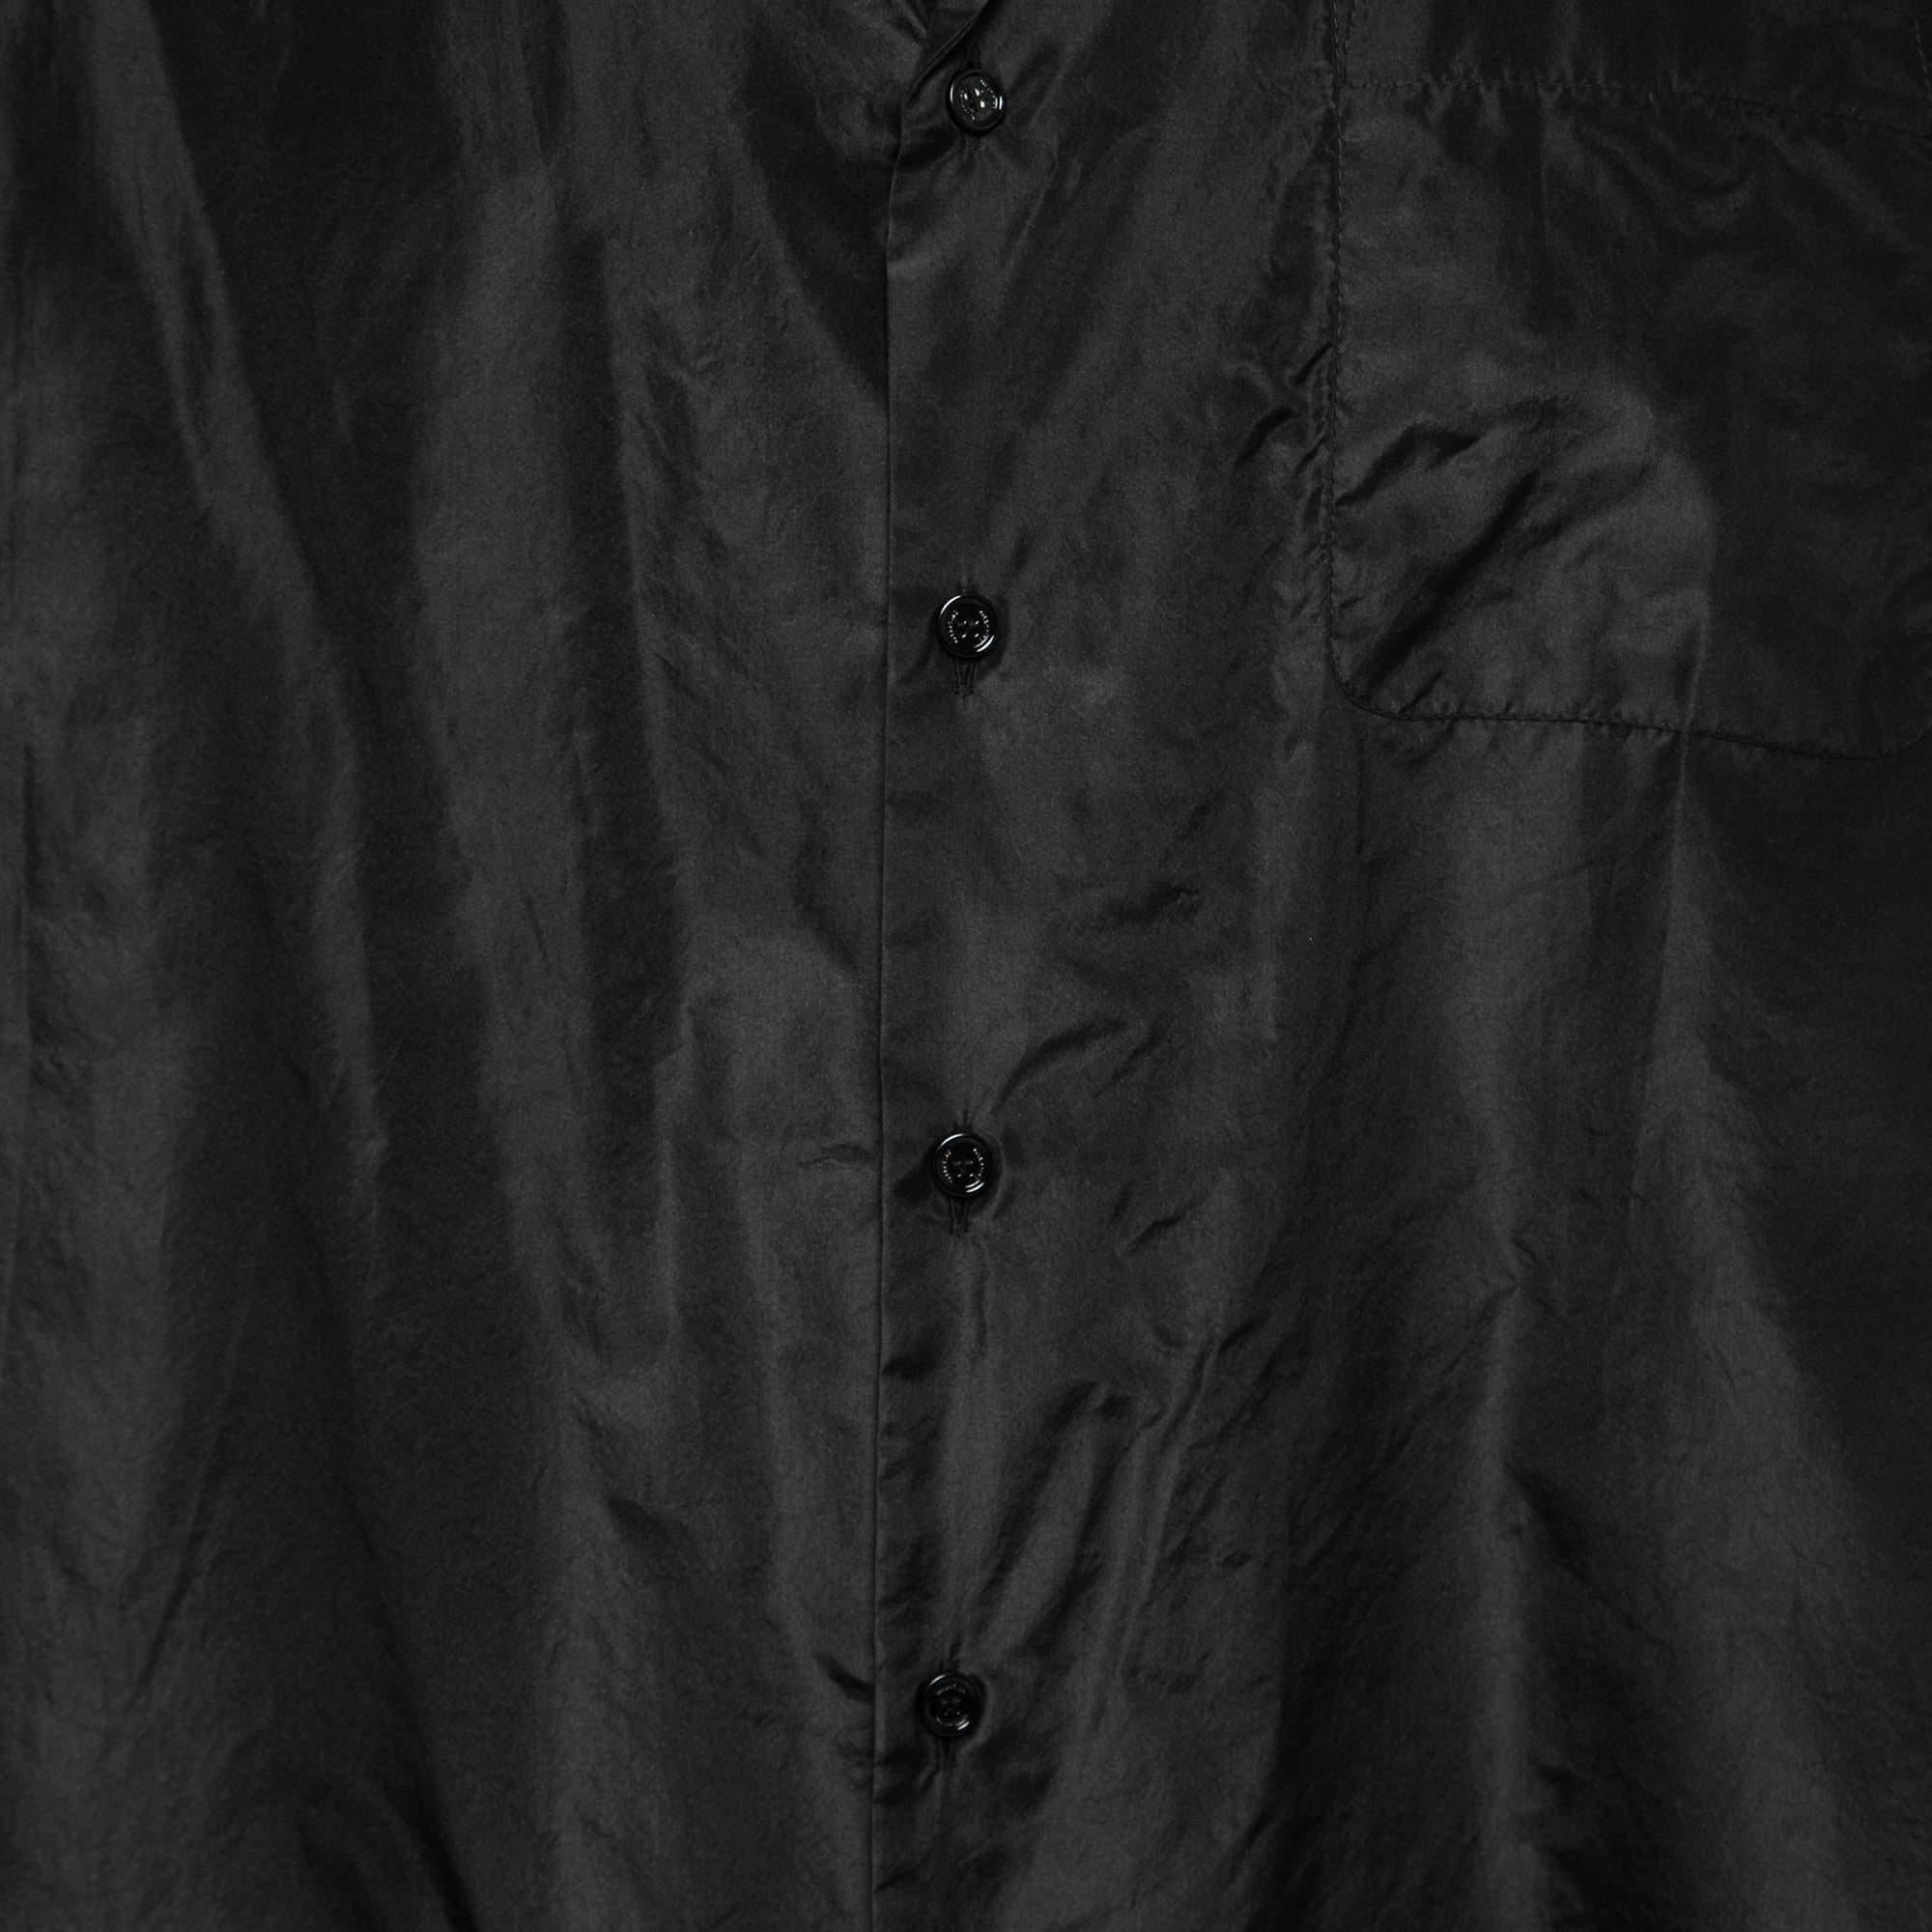 Valentino Black Silk Short-Sleeve Shirt S In New Condition For Sale In Dubai, Al Qouz 2